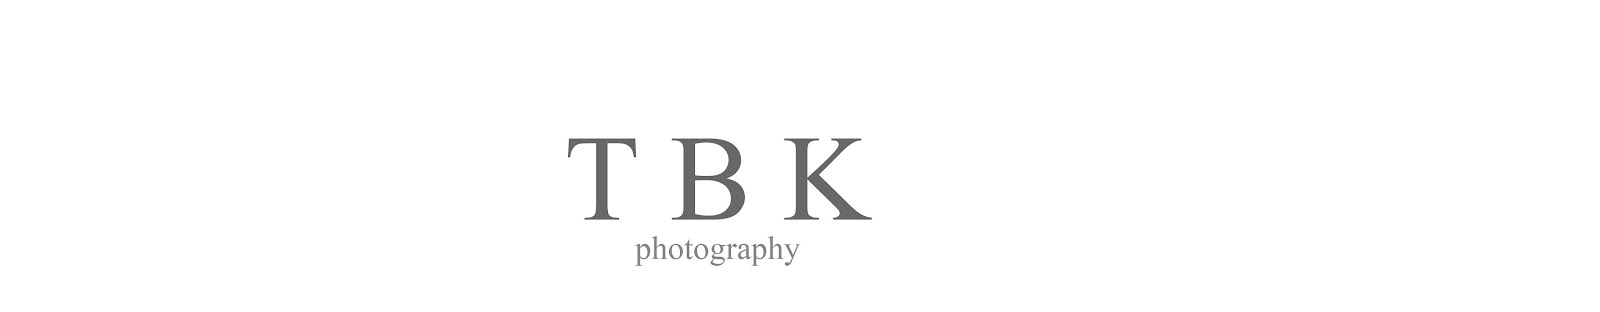 Tbk photography